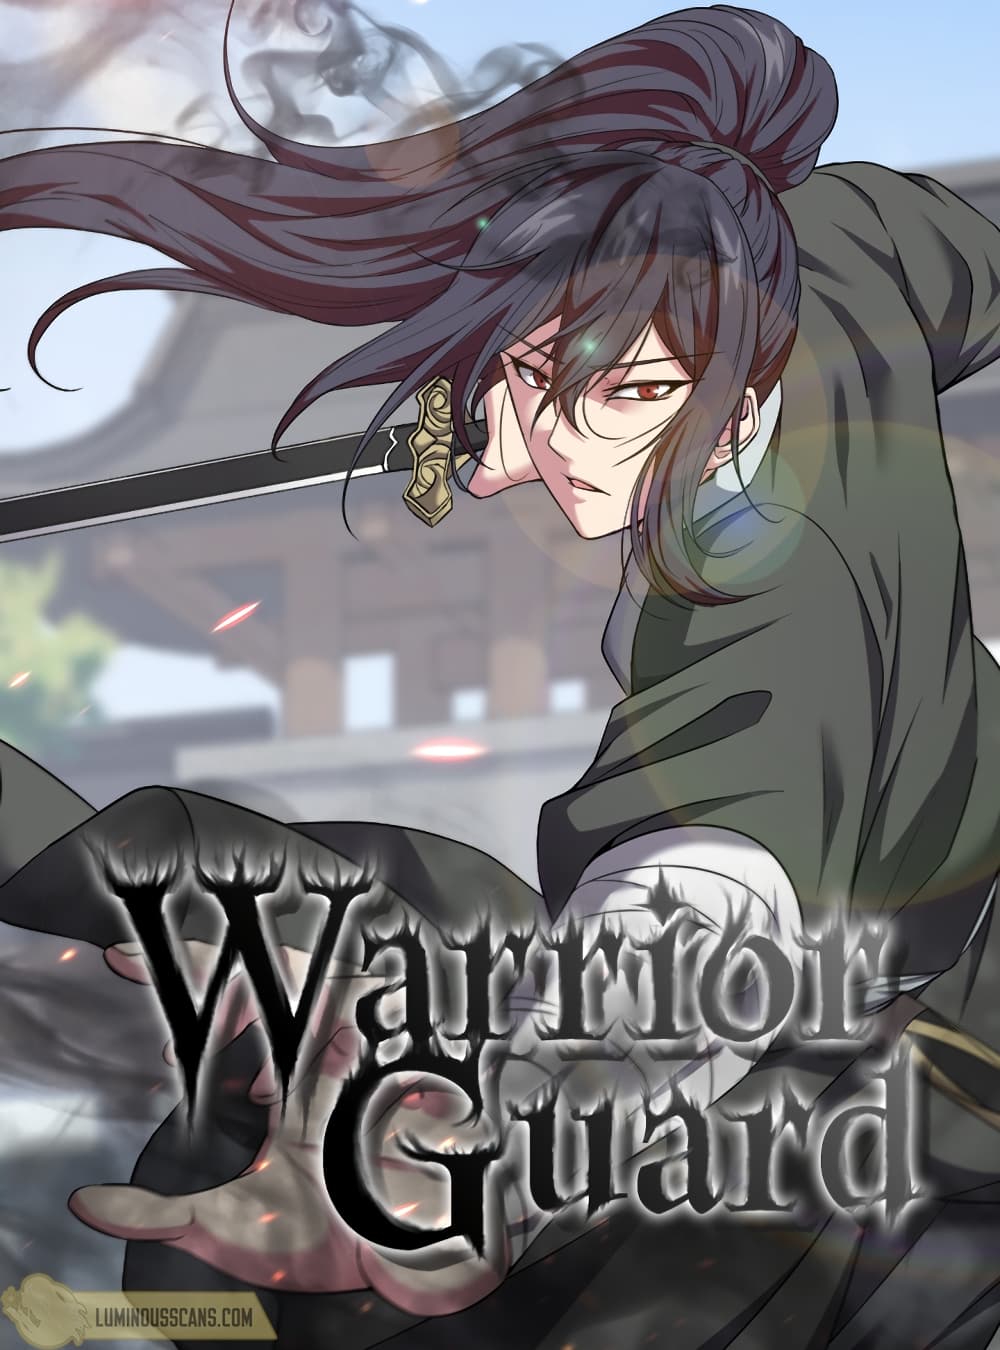 Warrior Guard 16-16